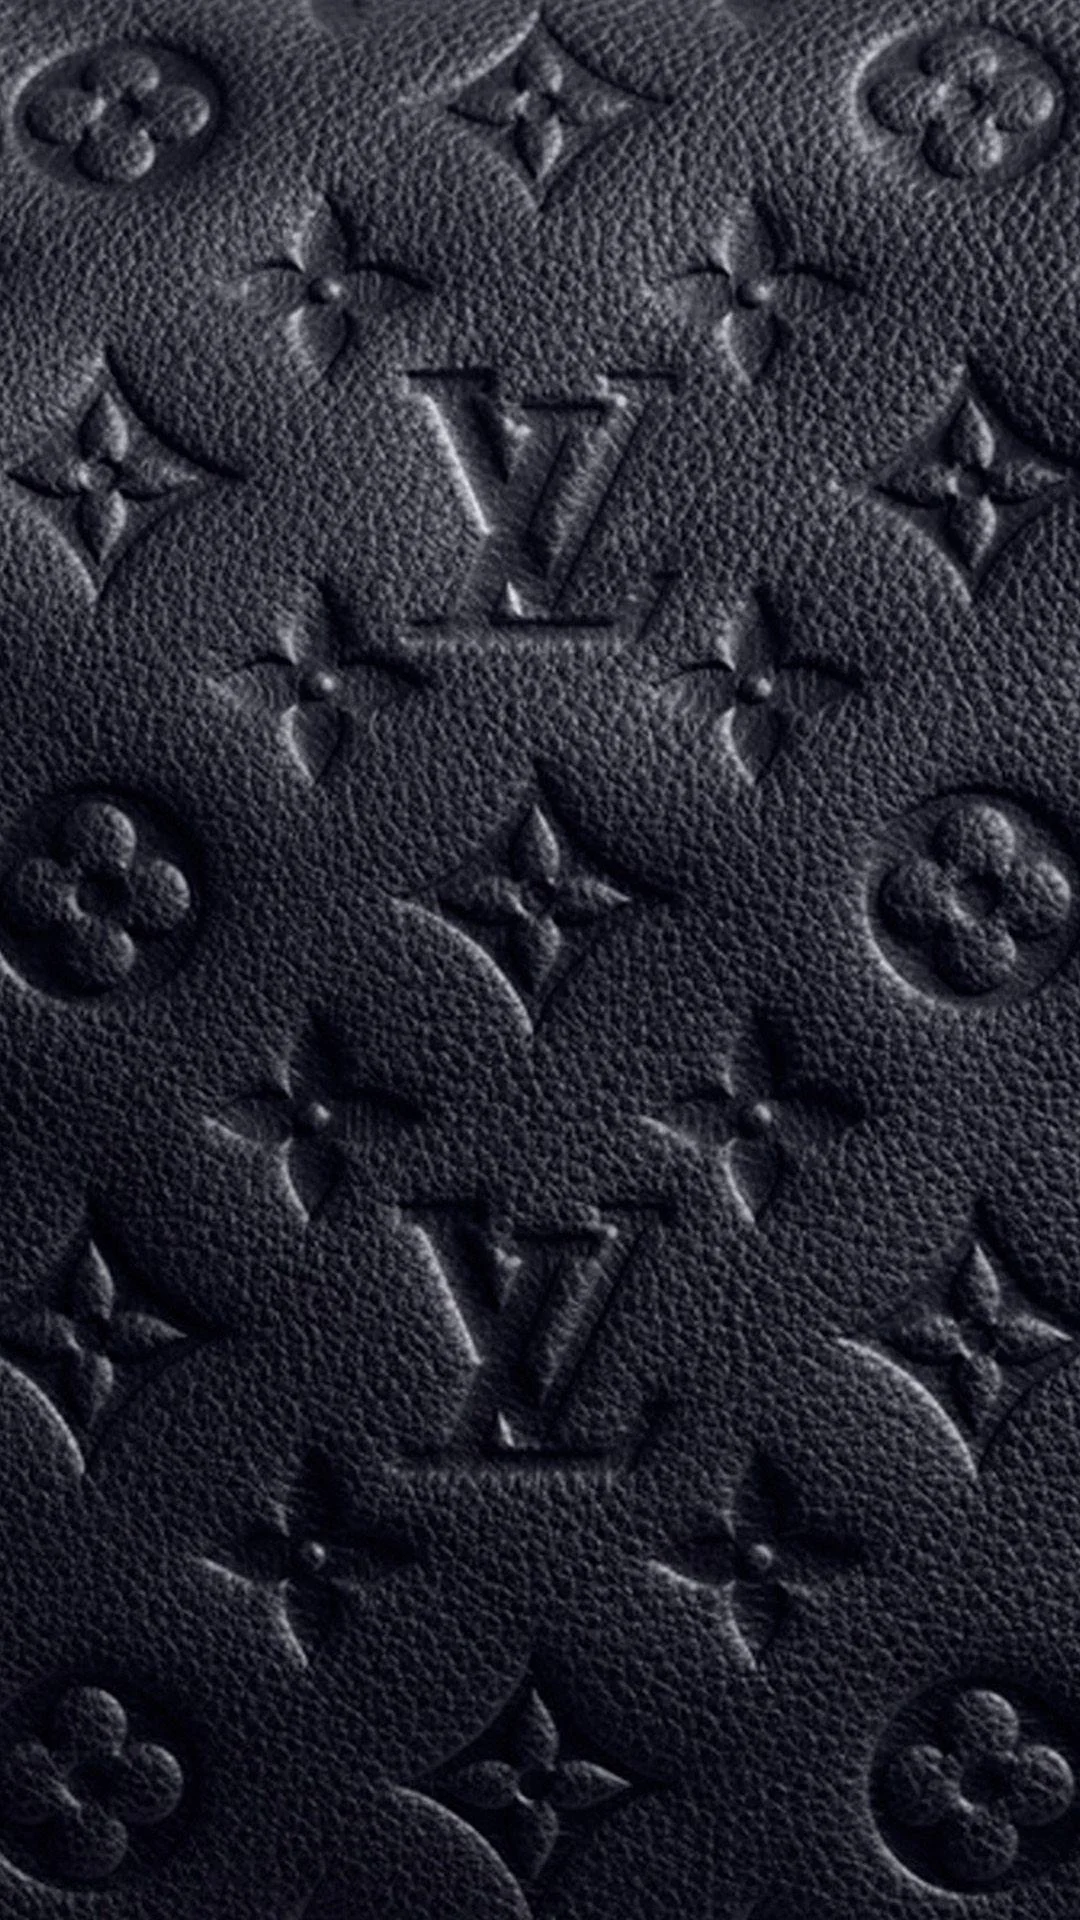 Louis Vuitton wallpaper by XICOR25 - Download on ZEDGE™